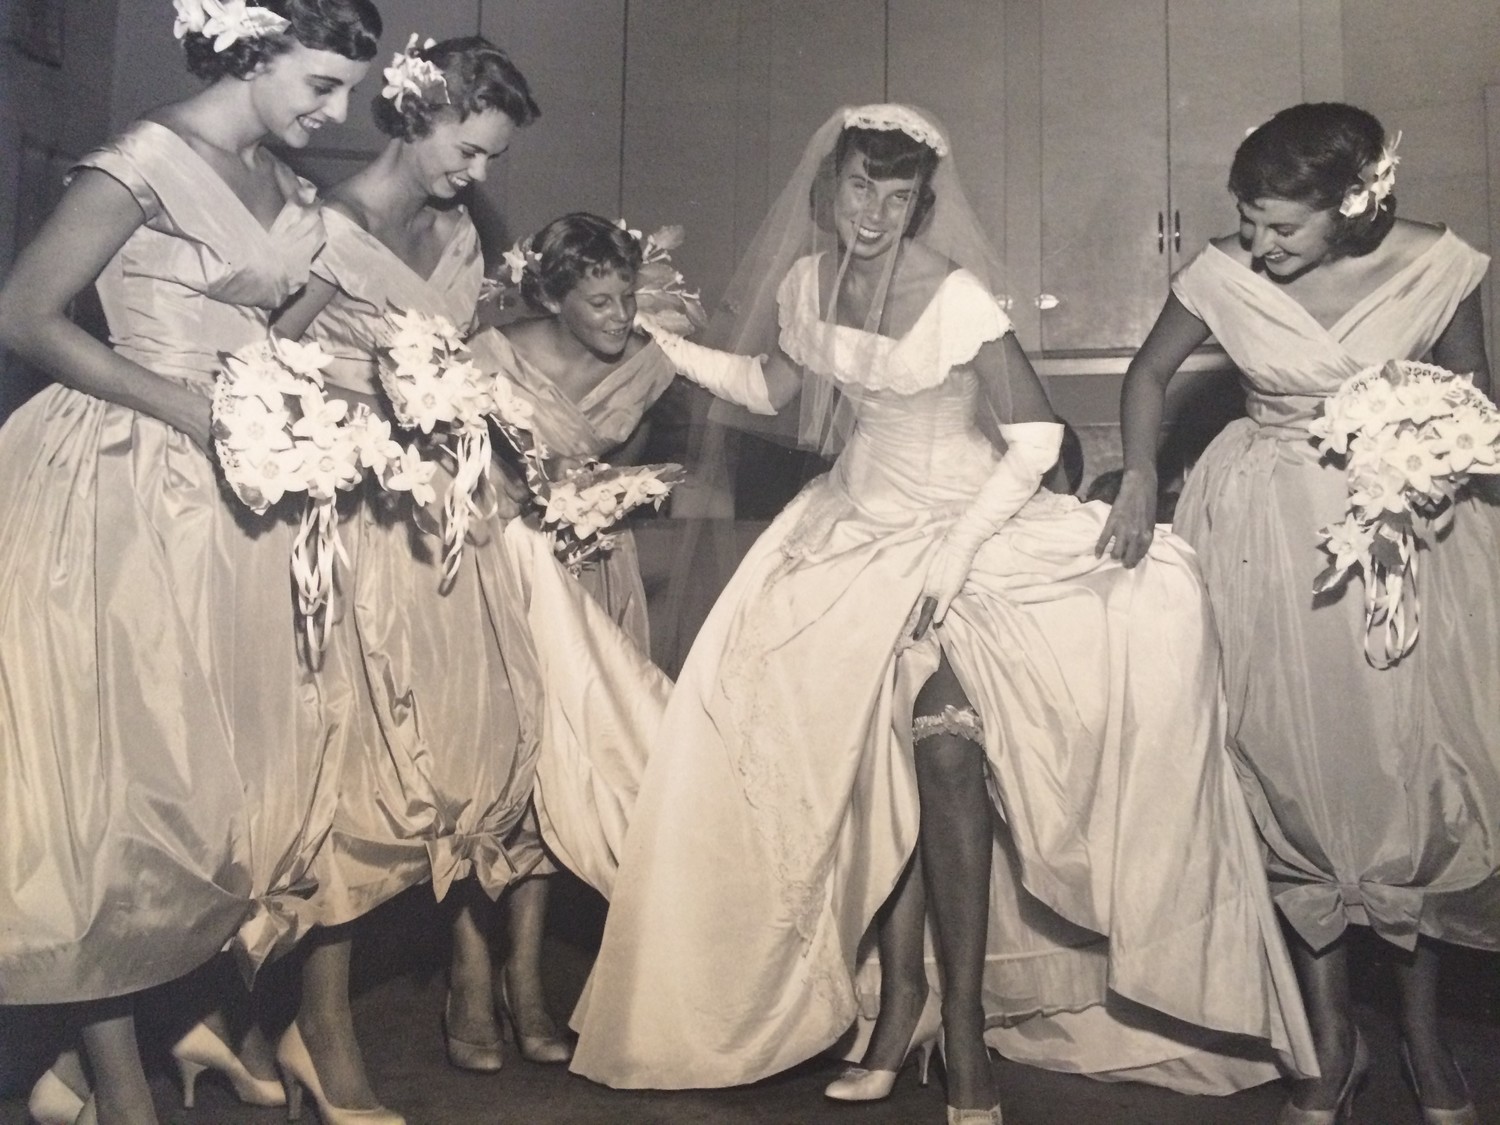 Jennie Veal’s bridesmaids admire her dress.